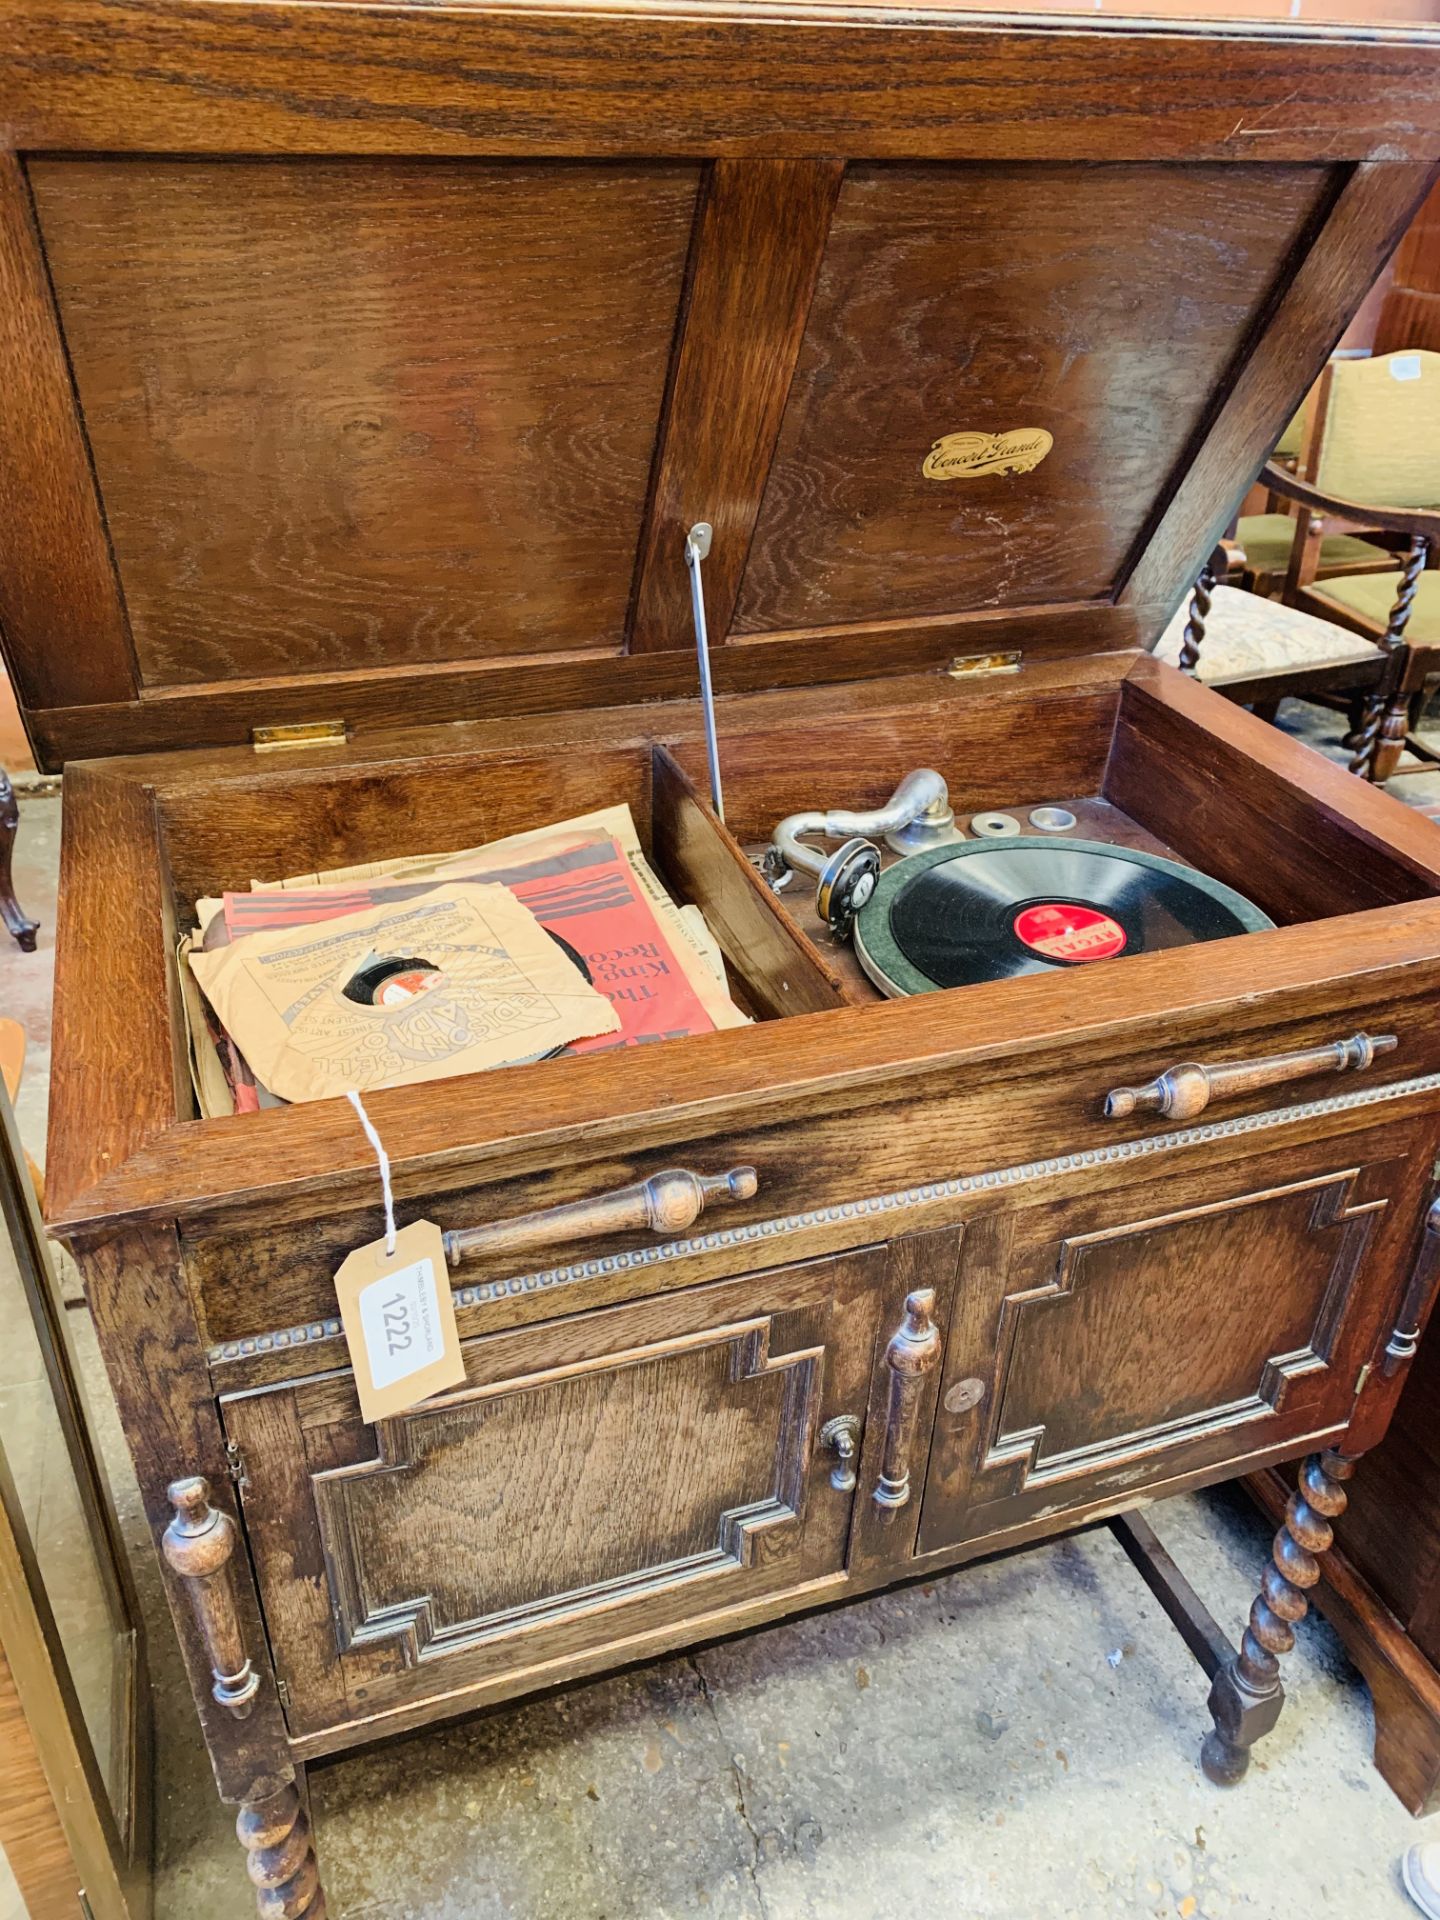 Concert Grande gramophone in oak cabinet.